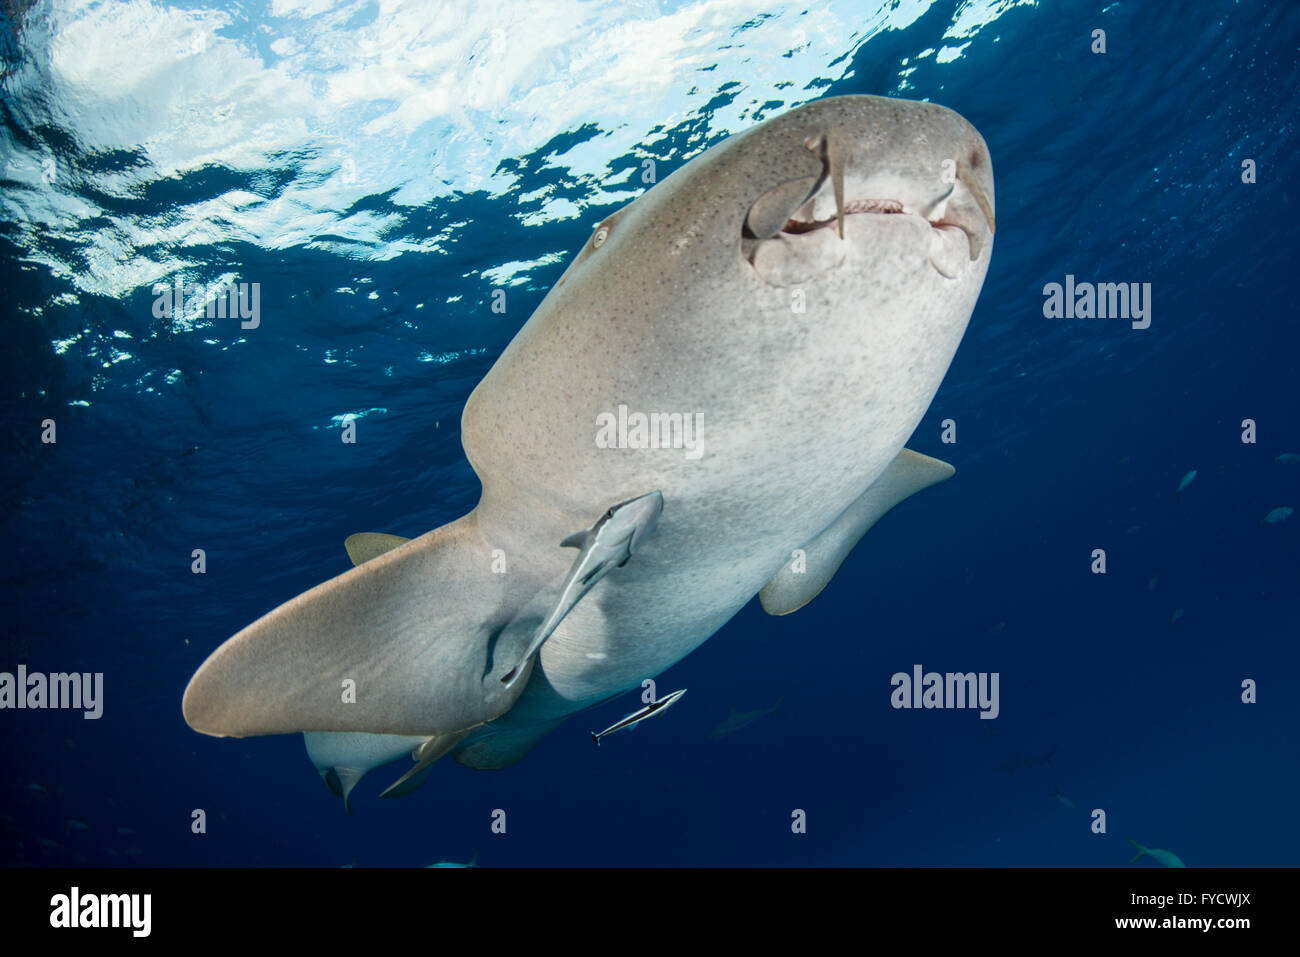 Nurse shark, Ginglymostoma cirratum, underside, Bahamas Stock Photo